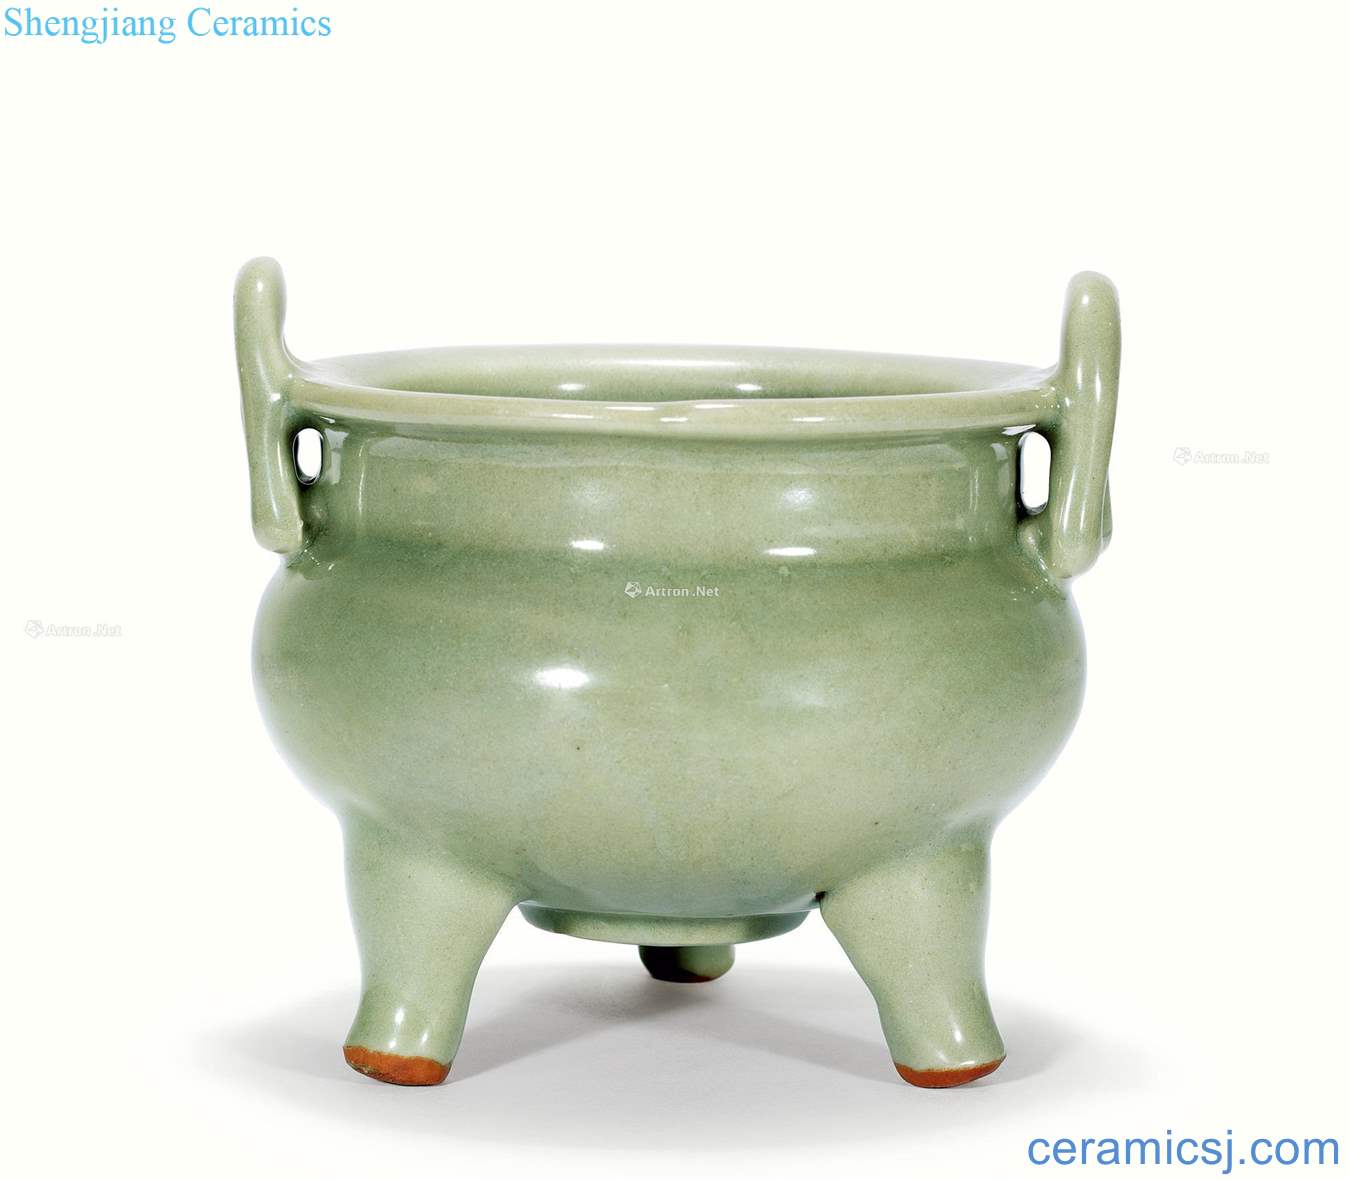 The yuan dynasty Longquan green glaze ears furnace with three legs